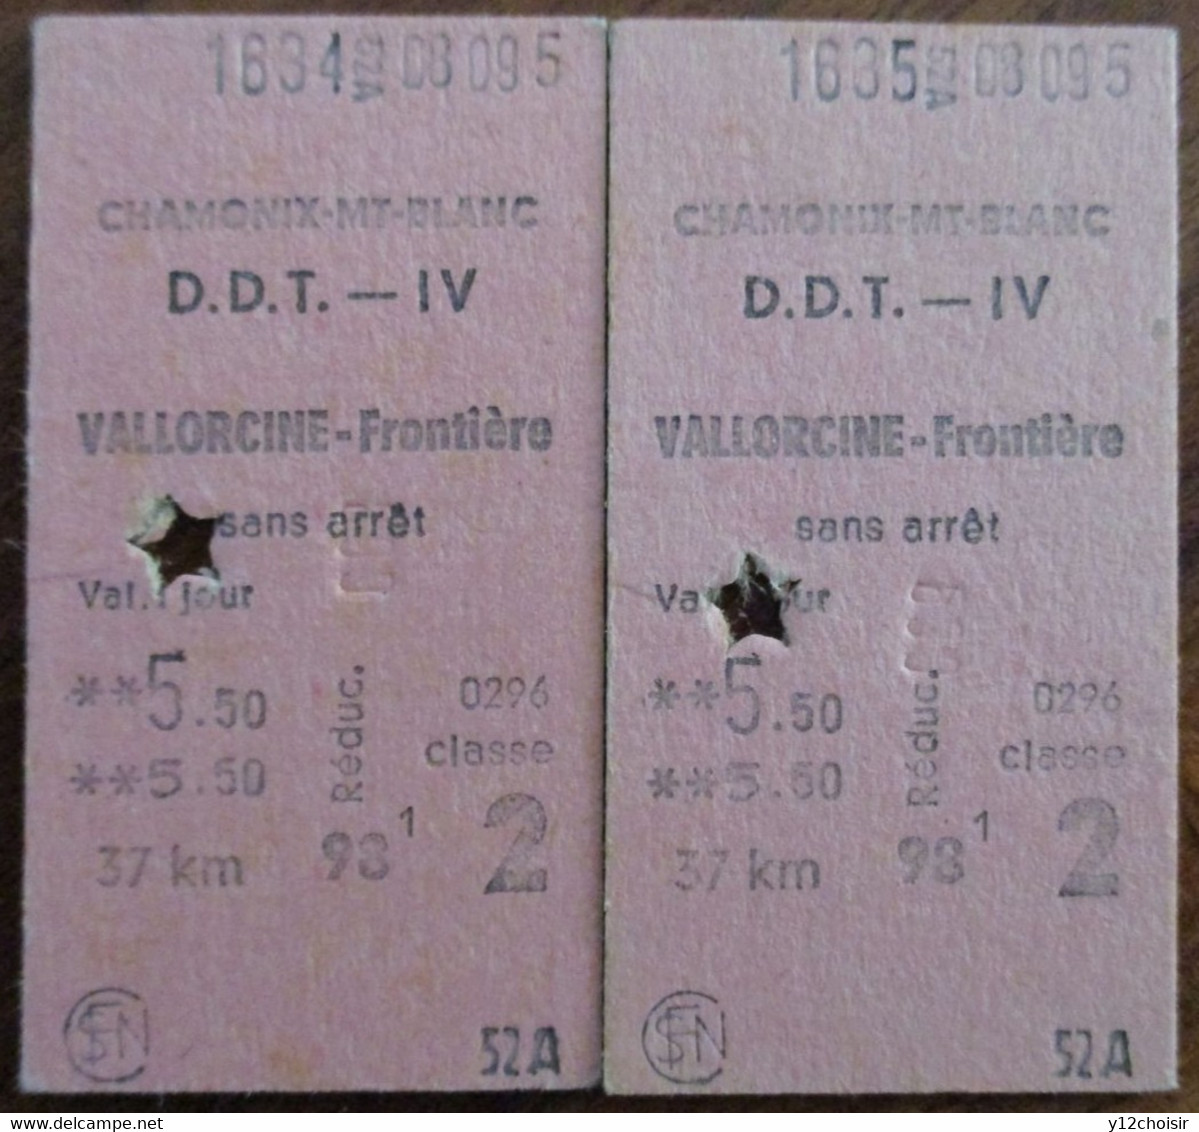 2 TICKETS TICKET SNCF CHAMONIX MT BLANC D.D.T. - IV VALLORCINE-FRONTIERE 2 EME CLASSE - Europe